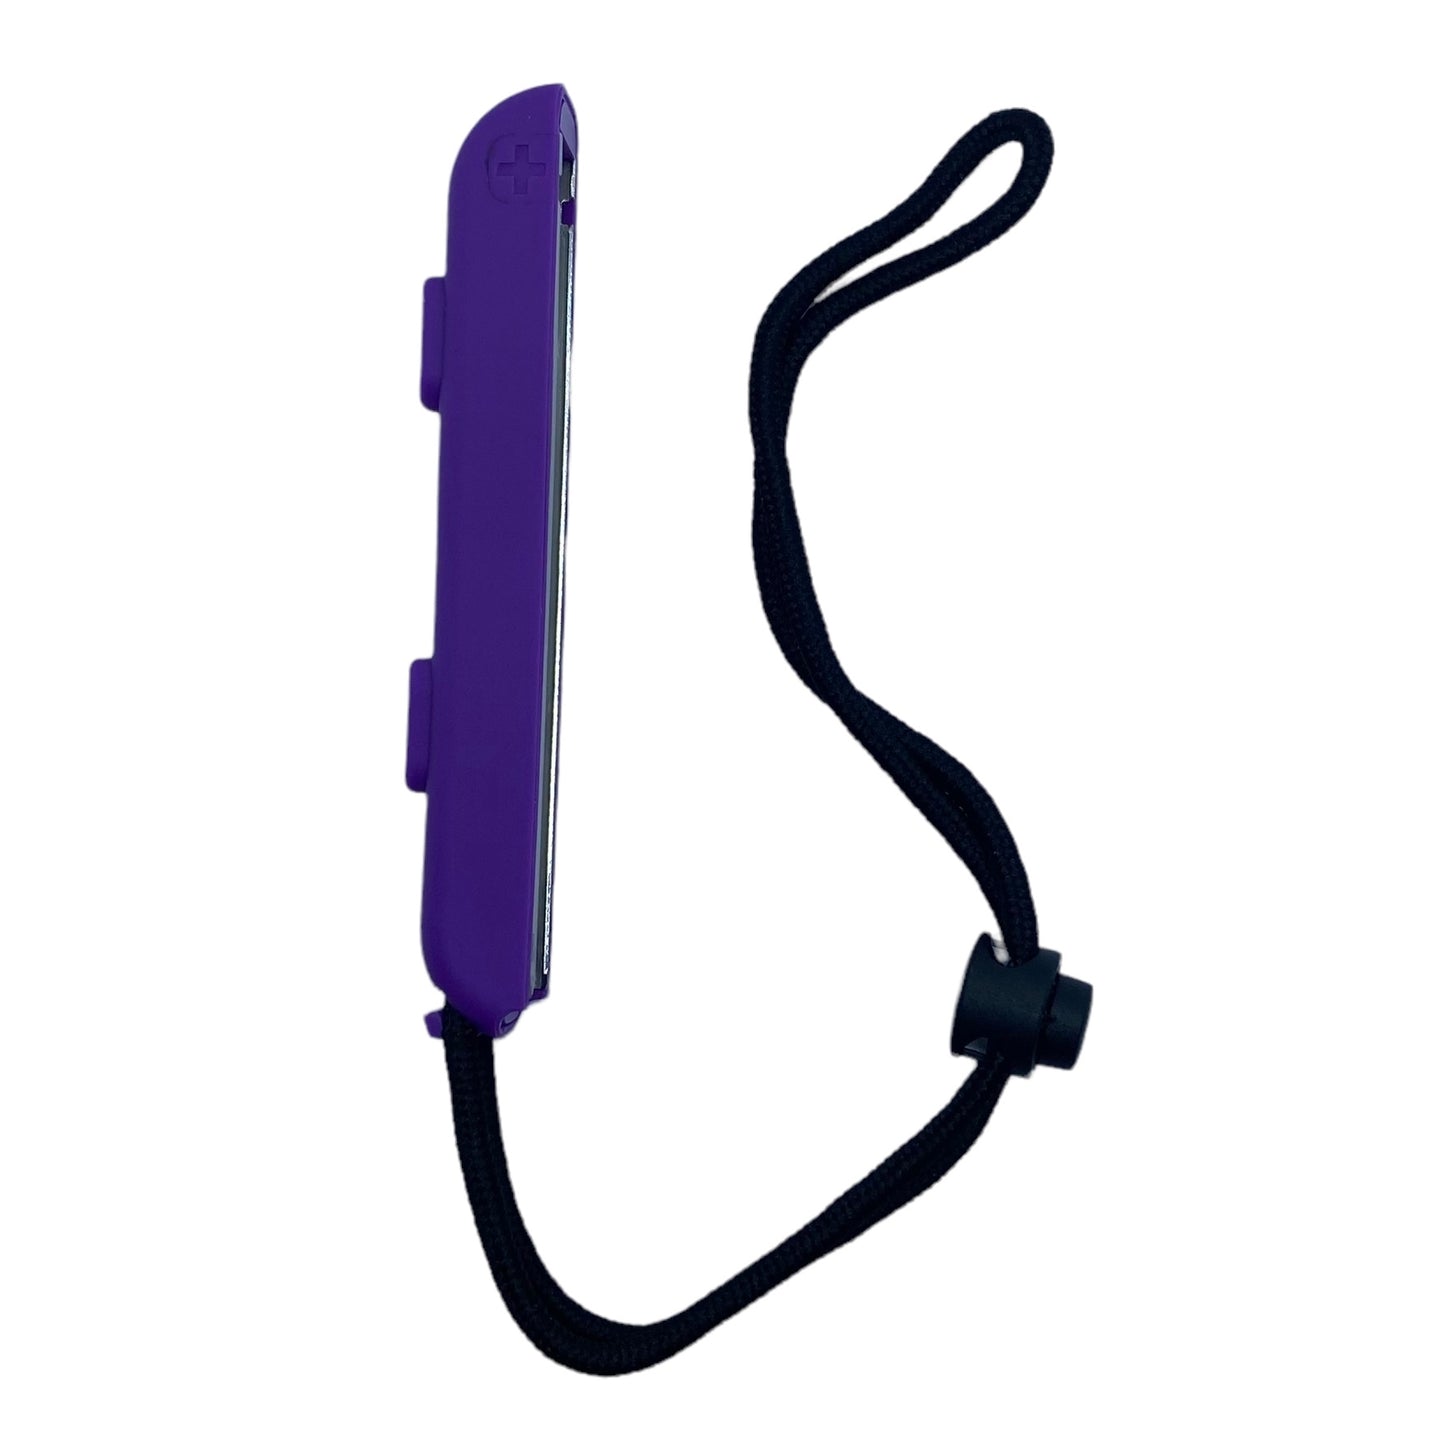 JenDore Purple Joy-con Wrist Strap Band for the Nintendo Switch